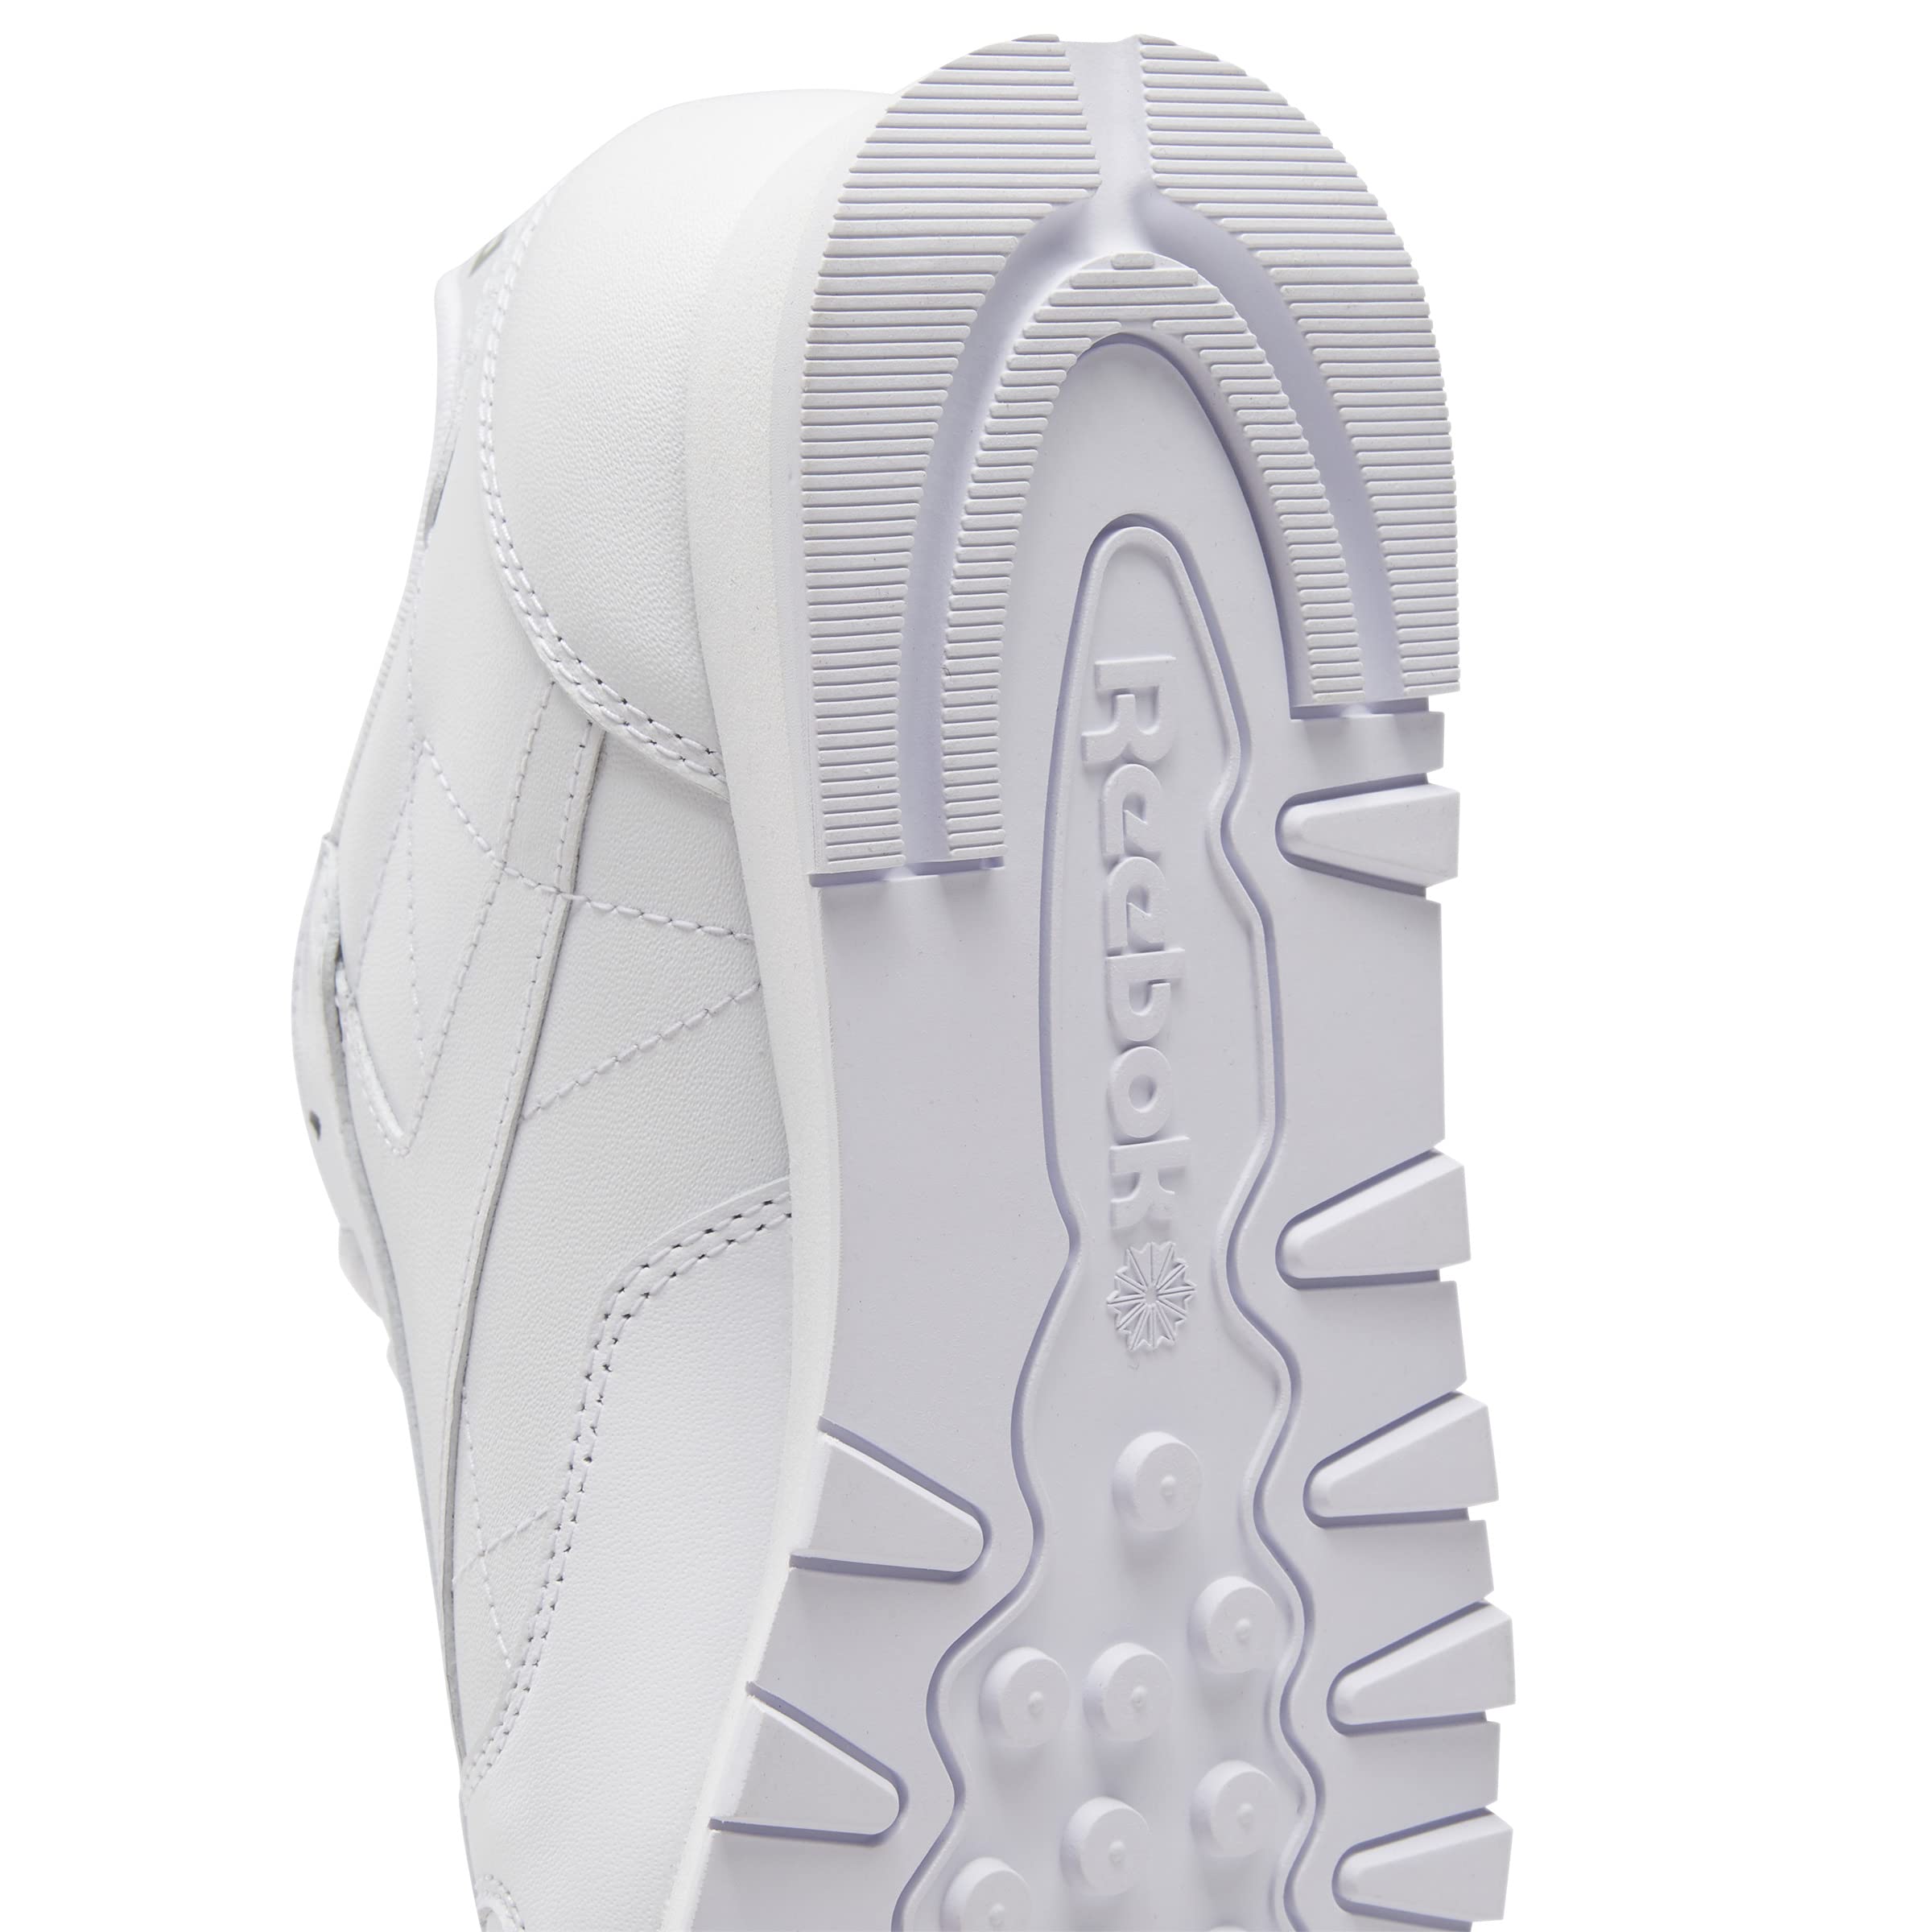 Reebok Unisex Classic Leather Sneaker, FTWR White/FTWR White/Pure Grey 3, 8.5 US Men